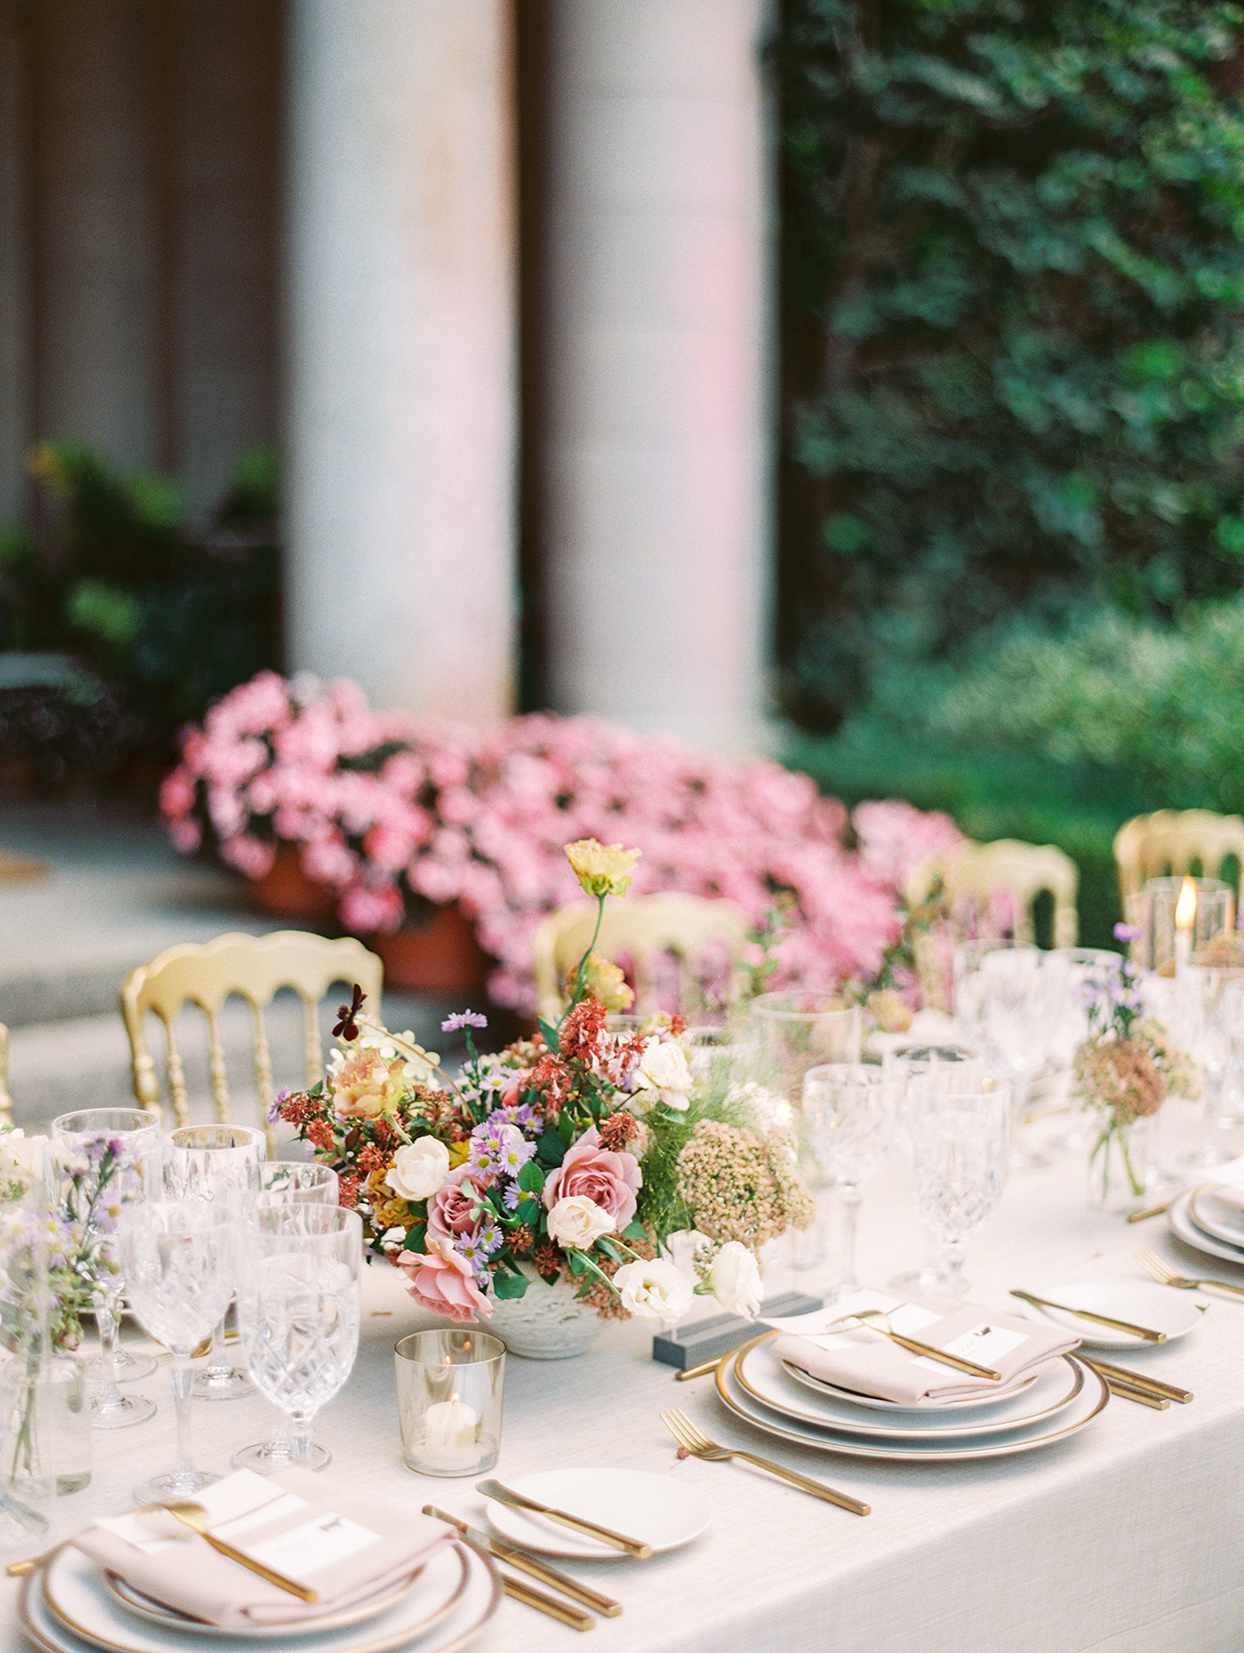 yalda anusha wedding reception table with pink hues floral centerpiece